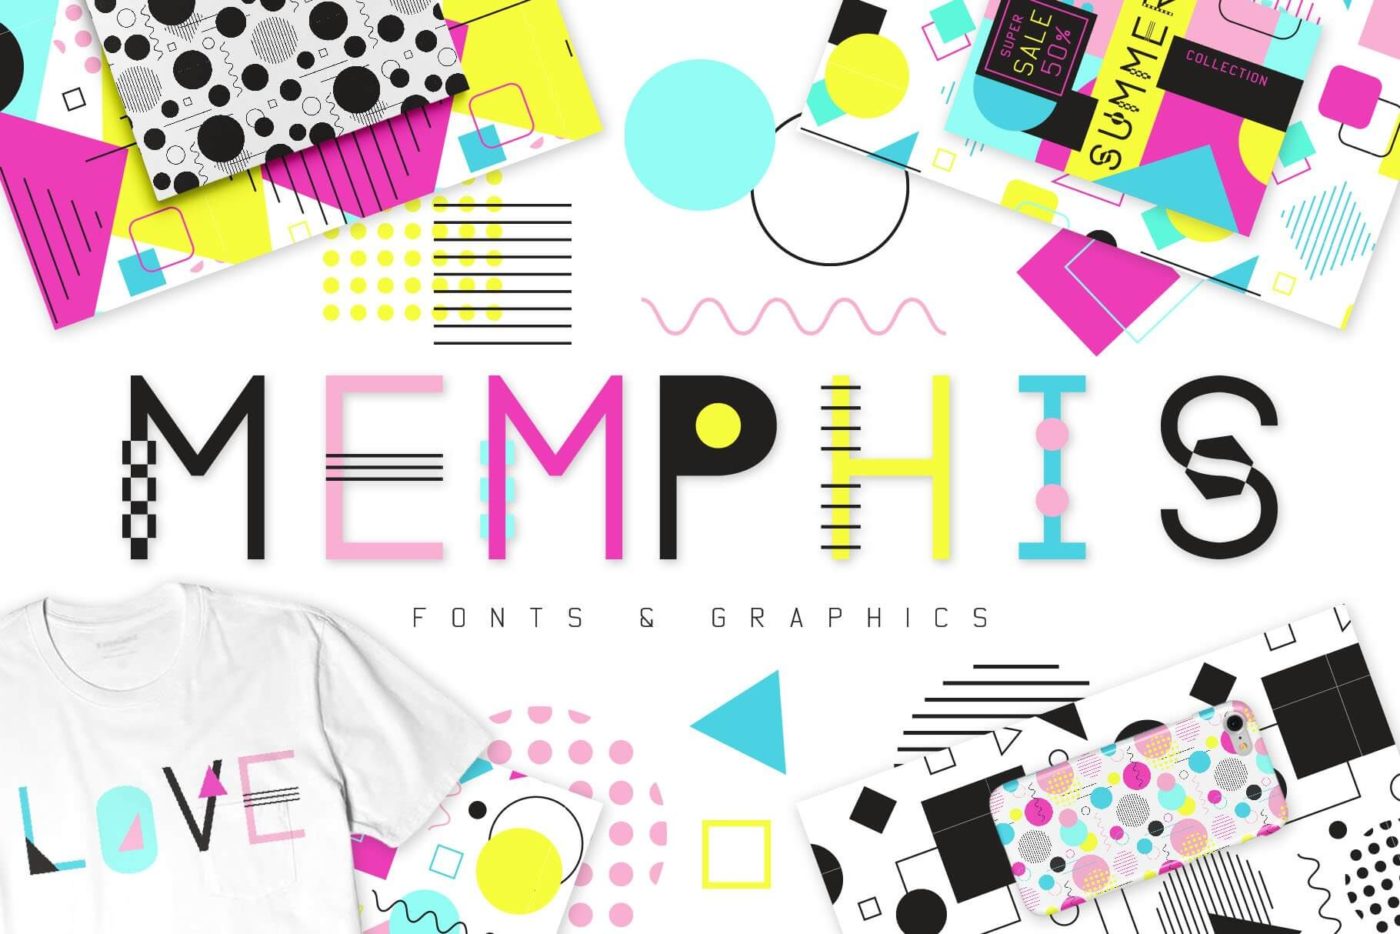 Memphis Font
--
25 Typefaces for Cool Kids • Little Gold Pixel • #schoolfonts #schooltype #schooltypefaces #typography #fonts